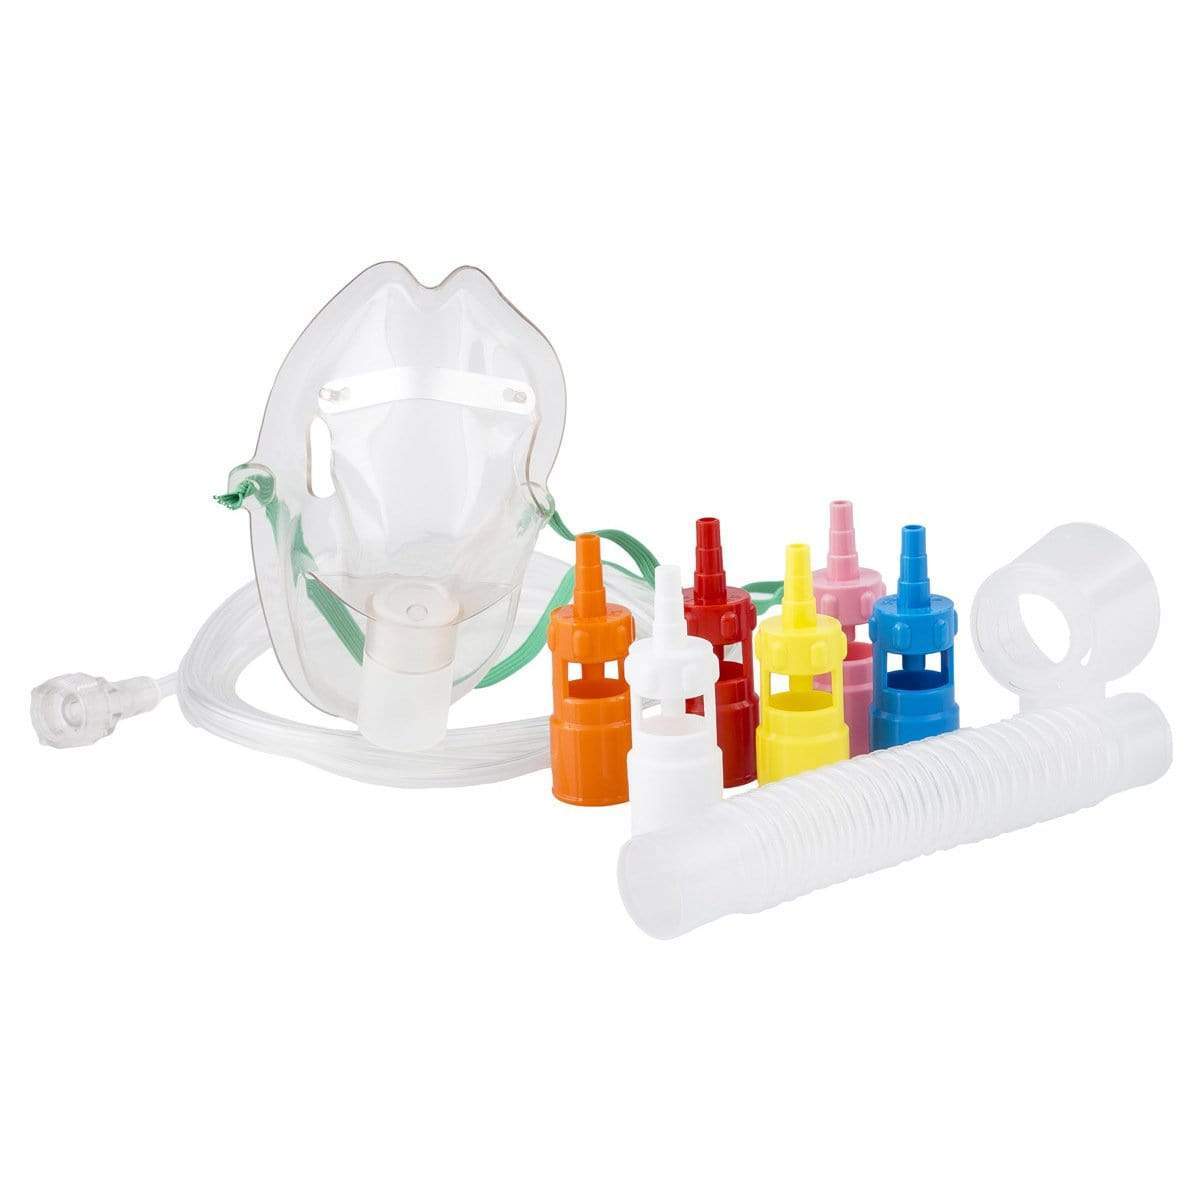 ConvaTec Oxygen Masks Venturi Variable Concentration Adult Mask with Oxygen Tubing ConvaTec Oxygen Masks